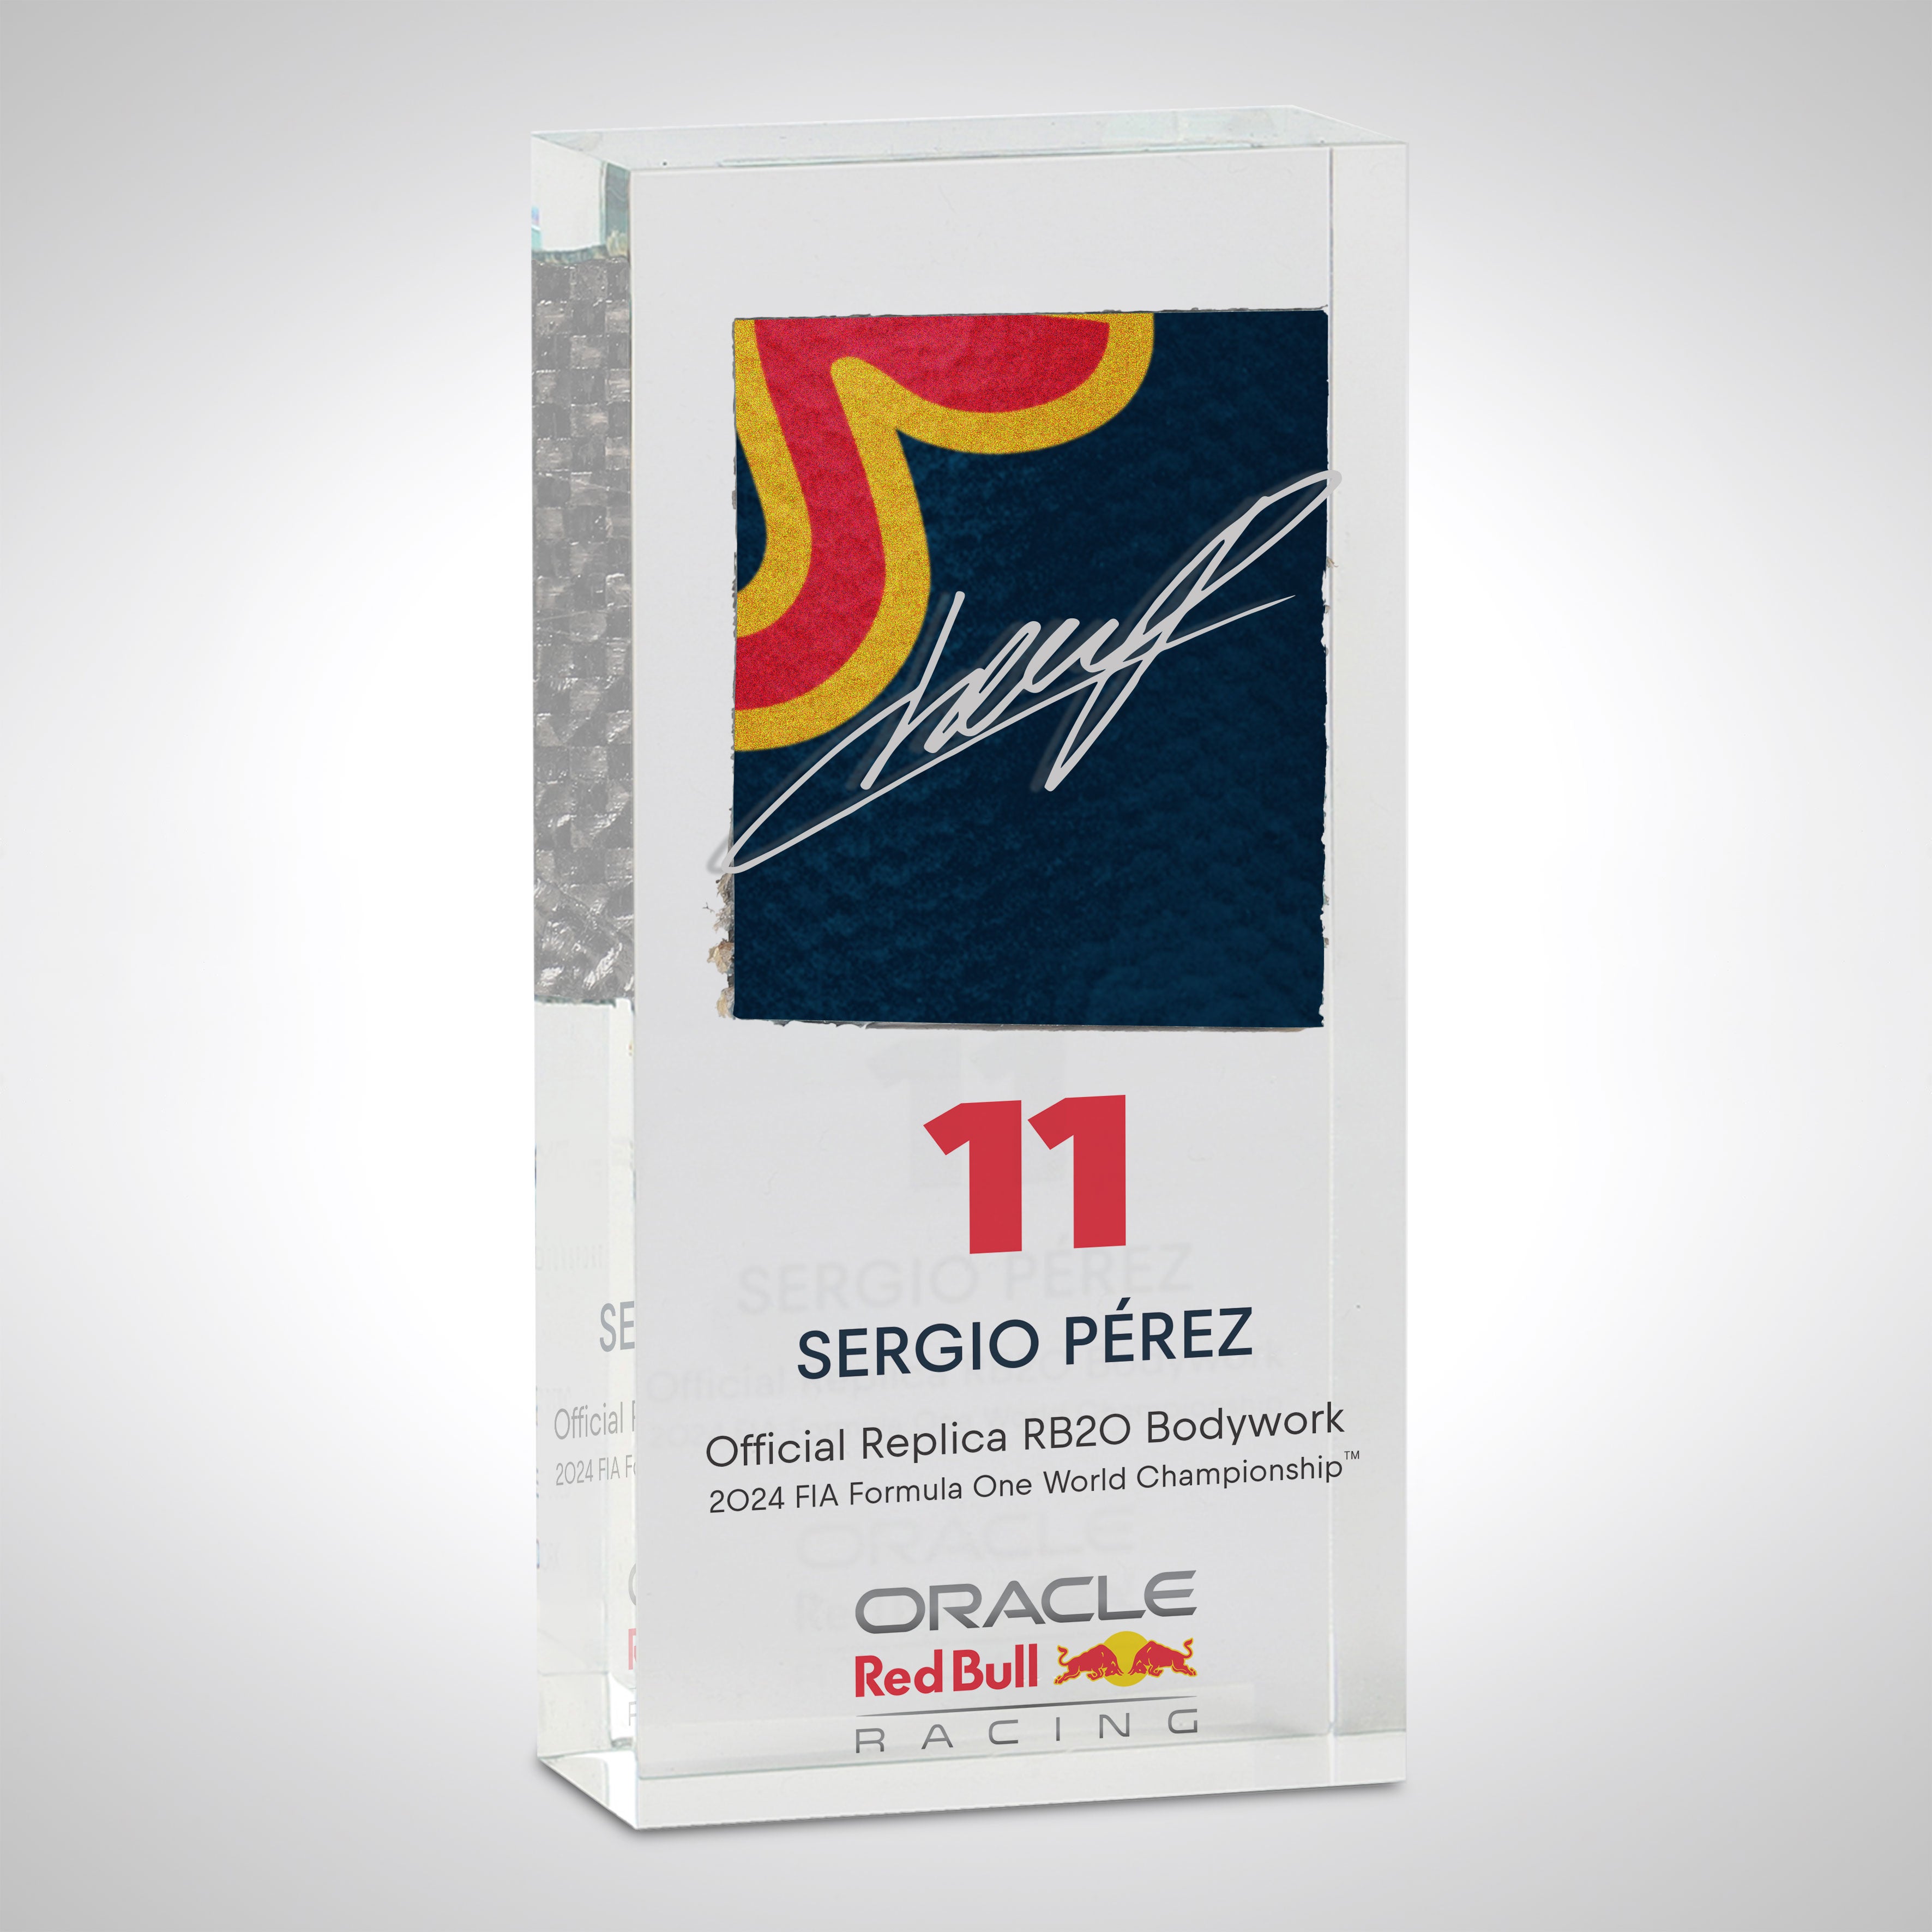 Sergio Perez 2024 Oracle Red Bull Racing Replica Bodywork in Acrylic